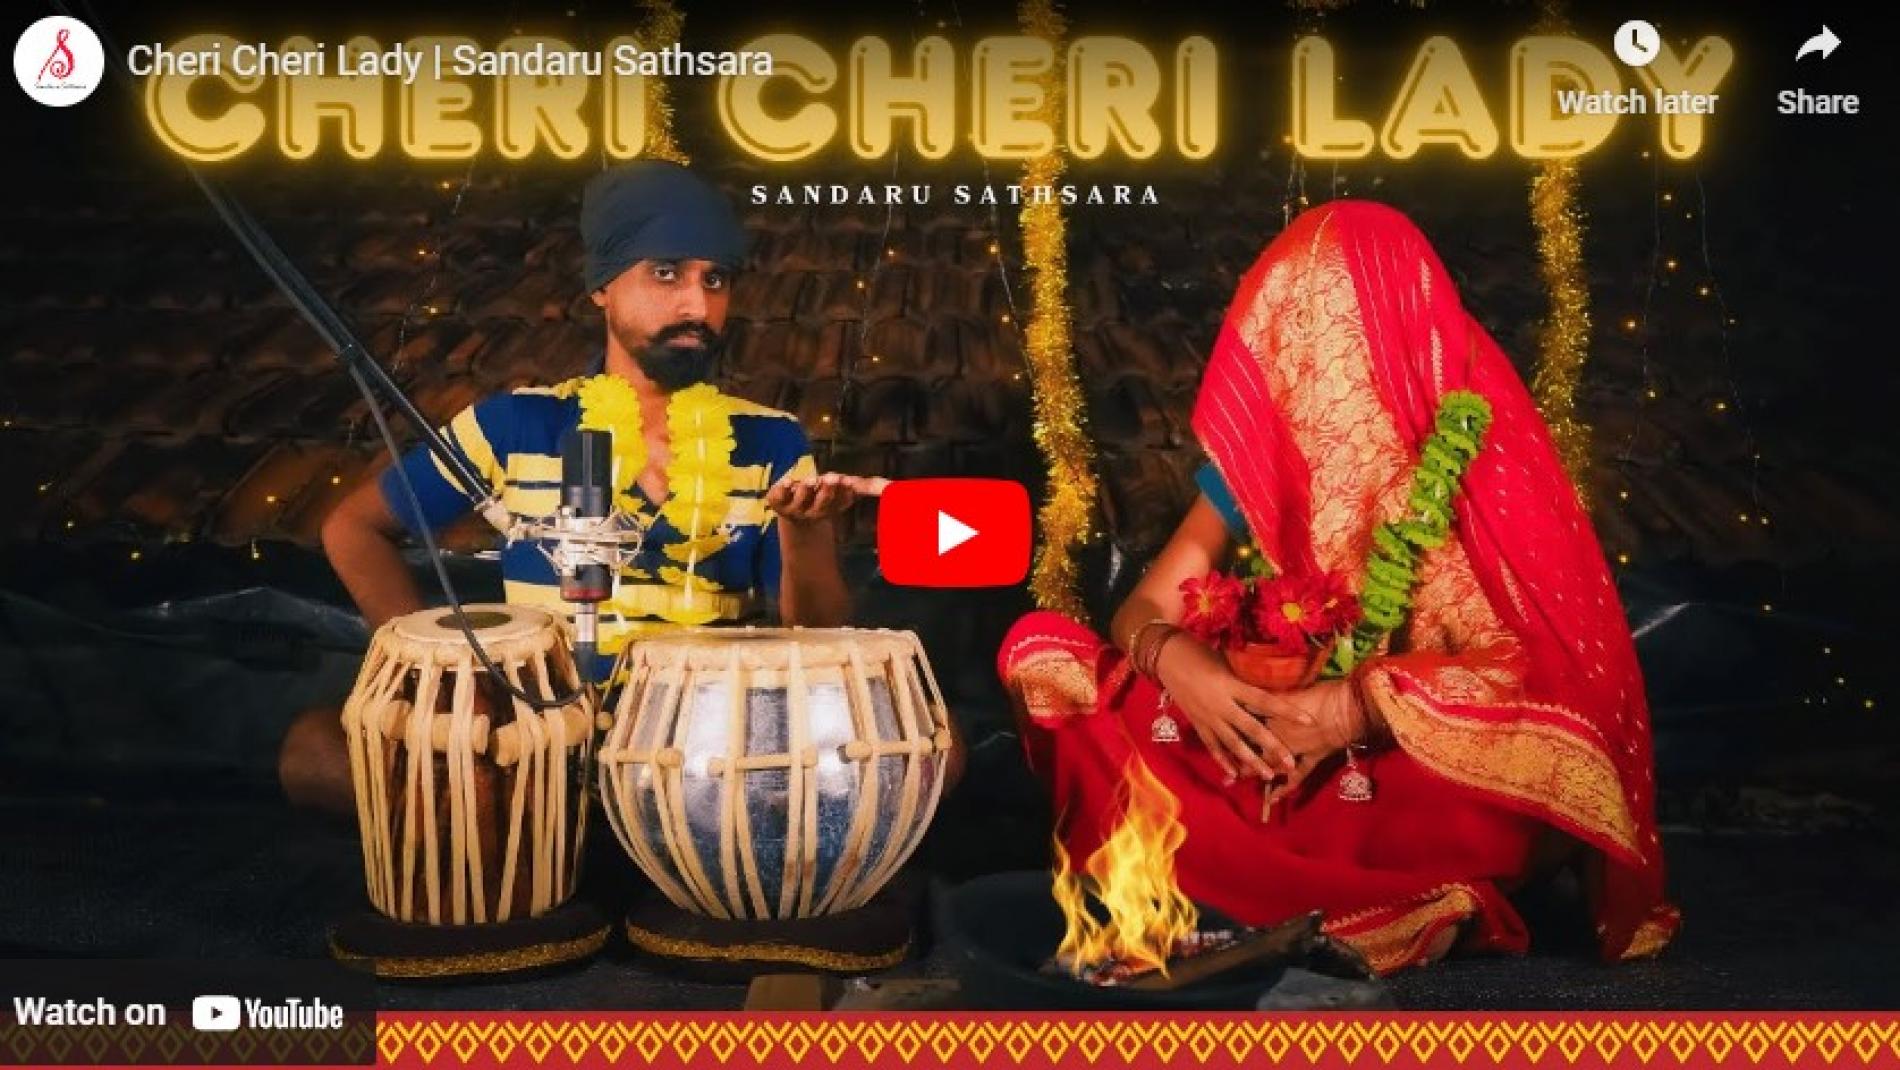 New Music : Cheri Cheri Lady | Sandaru Sathsara